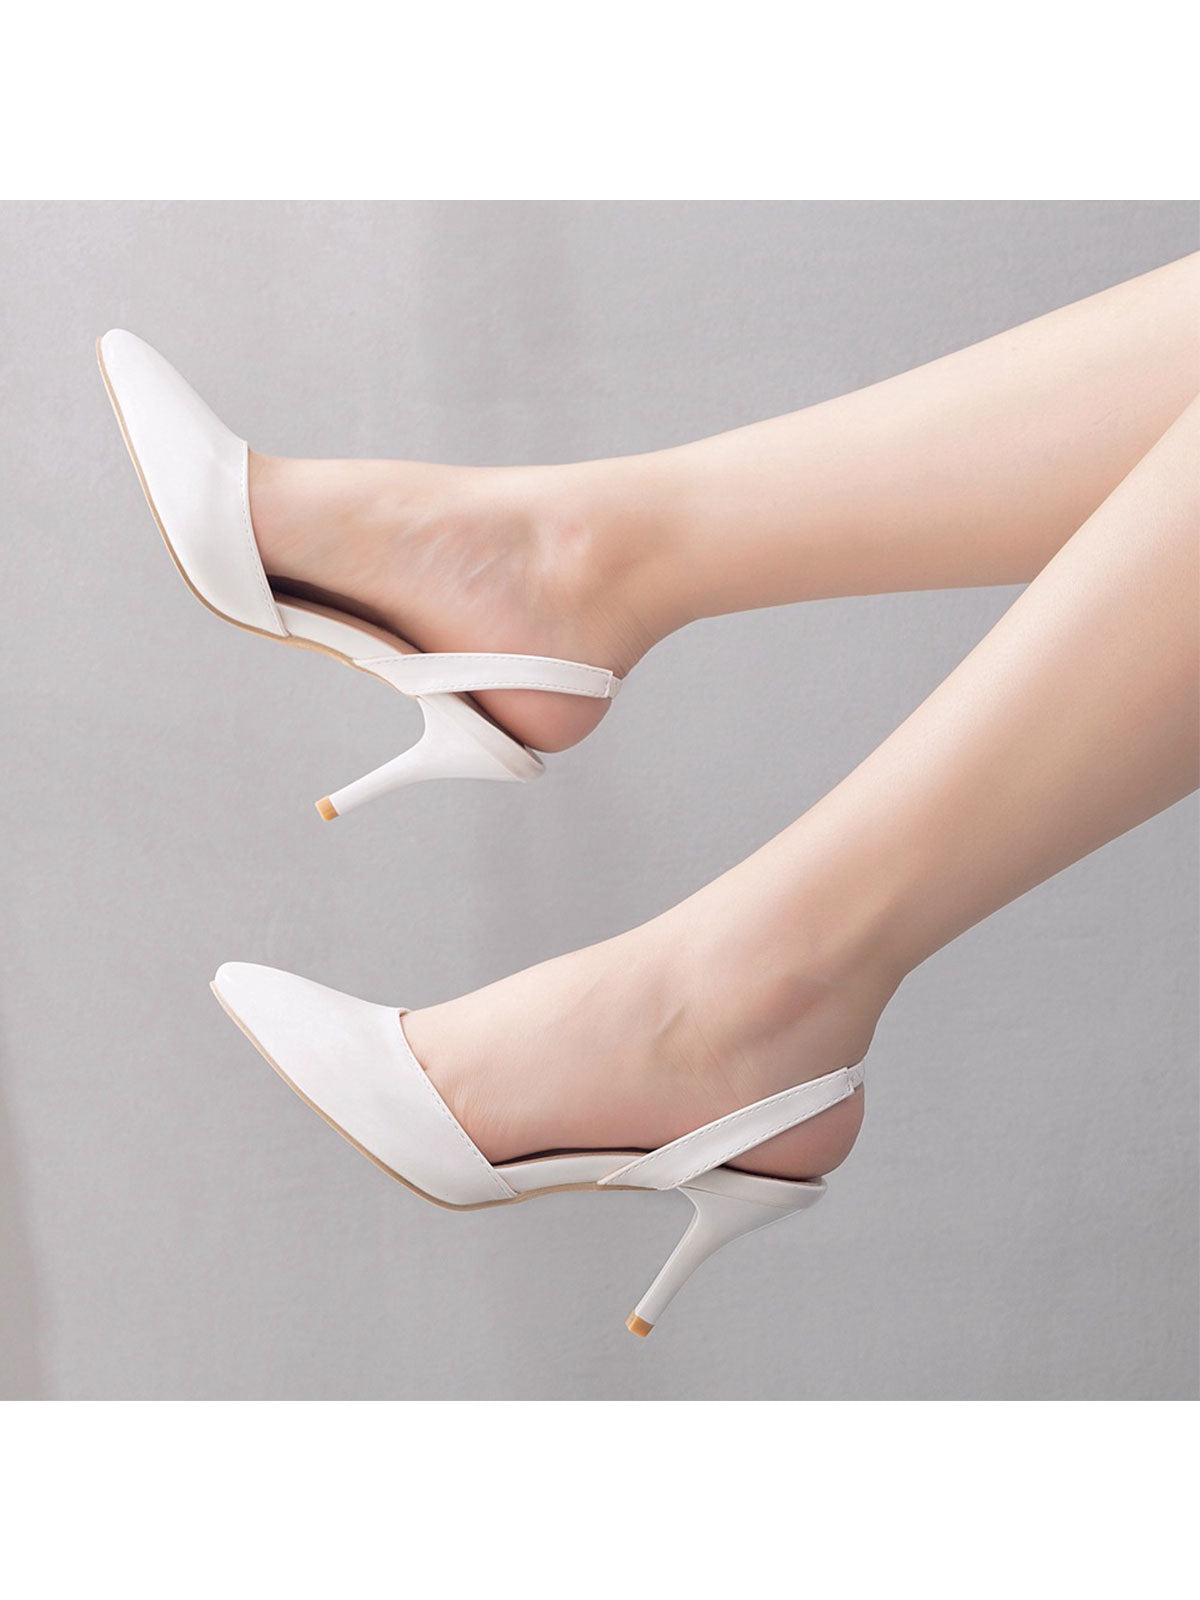 Simple Elegant Pointed Toe Stiletto Slingback High Heels